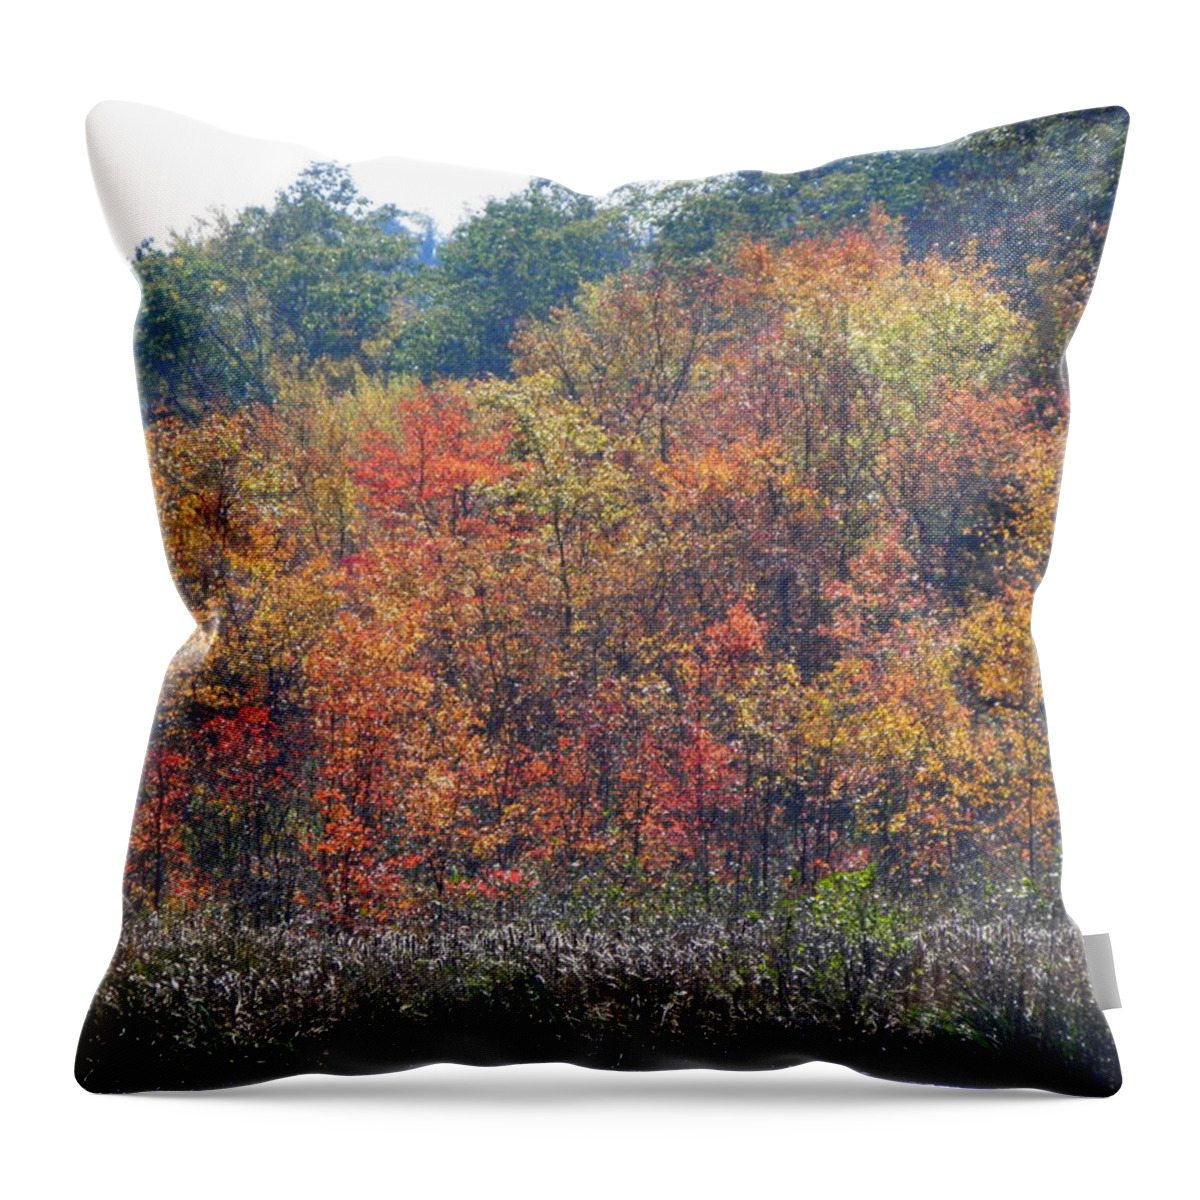 Autumn Throw Pillow featuring the photograph Looks Like A Painting by Kim Galluzzo Wozniak